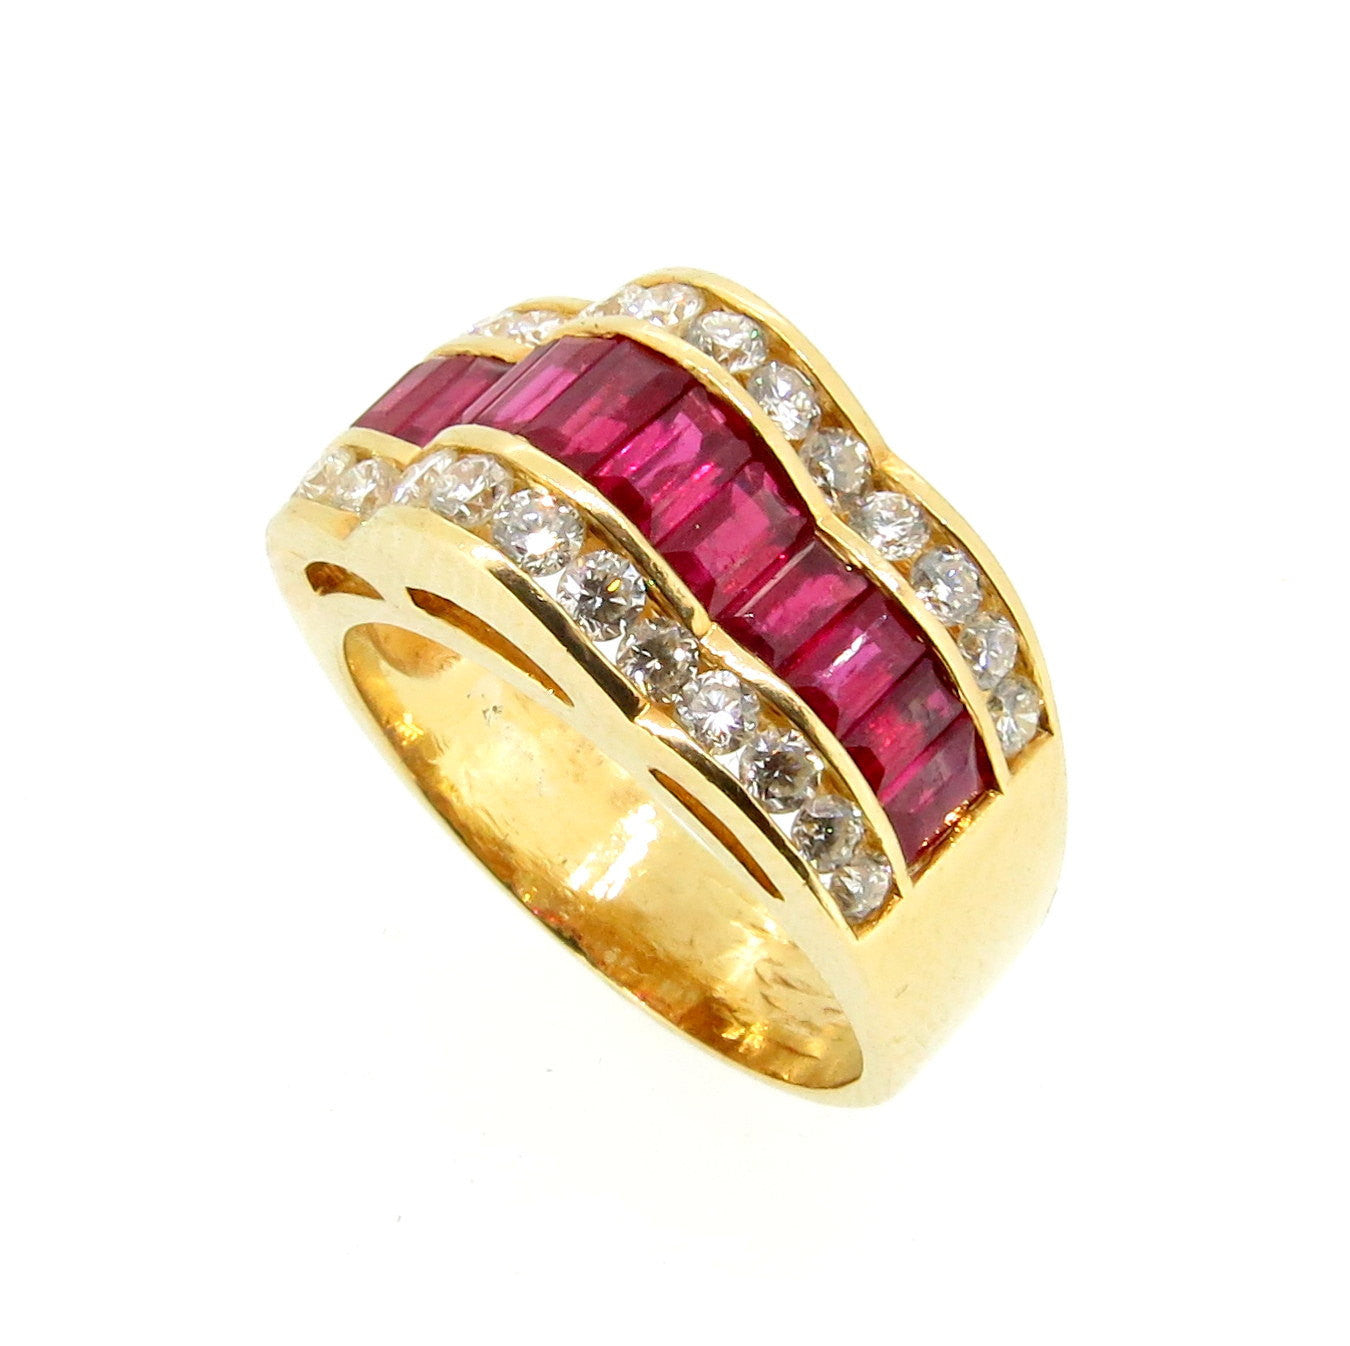 Ruby Gemstone & Diamond Engagement Ring, Anniversary Ring, Gemstone Engagement Ring, Alternative Engagement Ring, Cocktail Ring